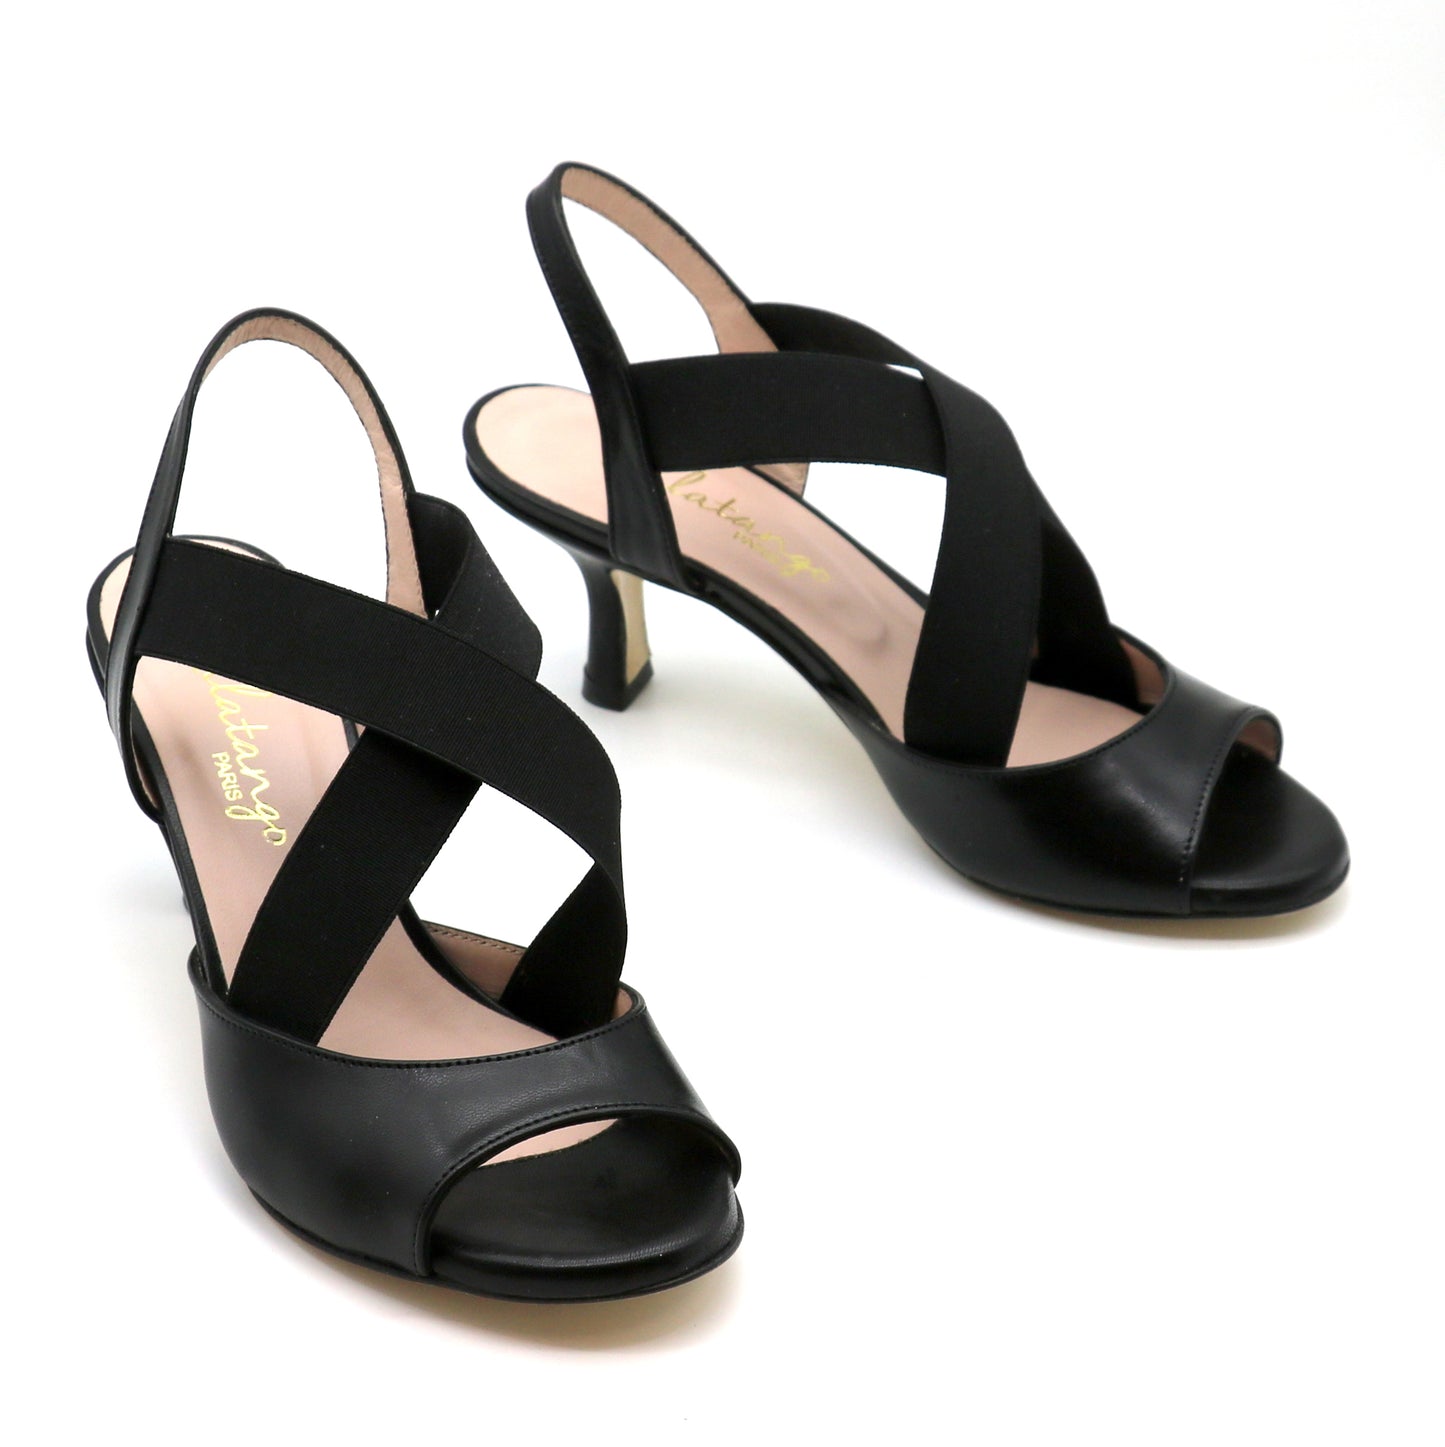 Mirada black smooth leather heels 6cm